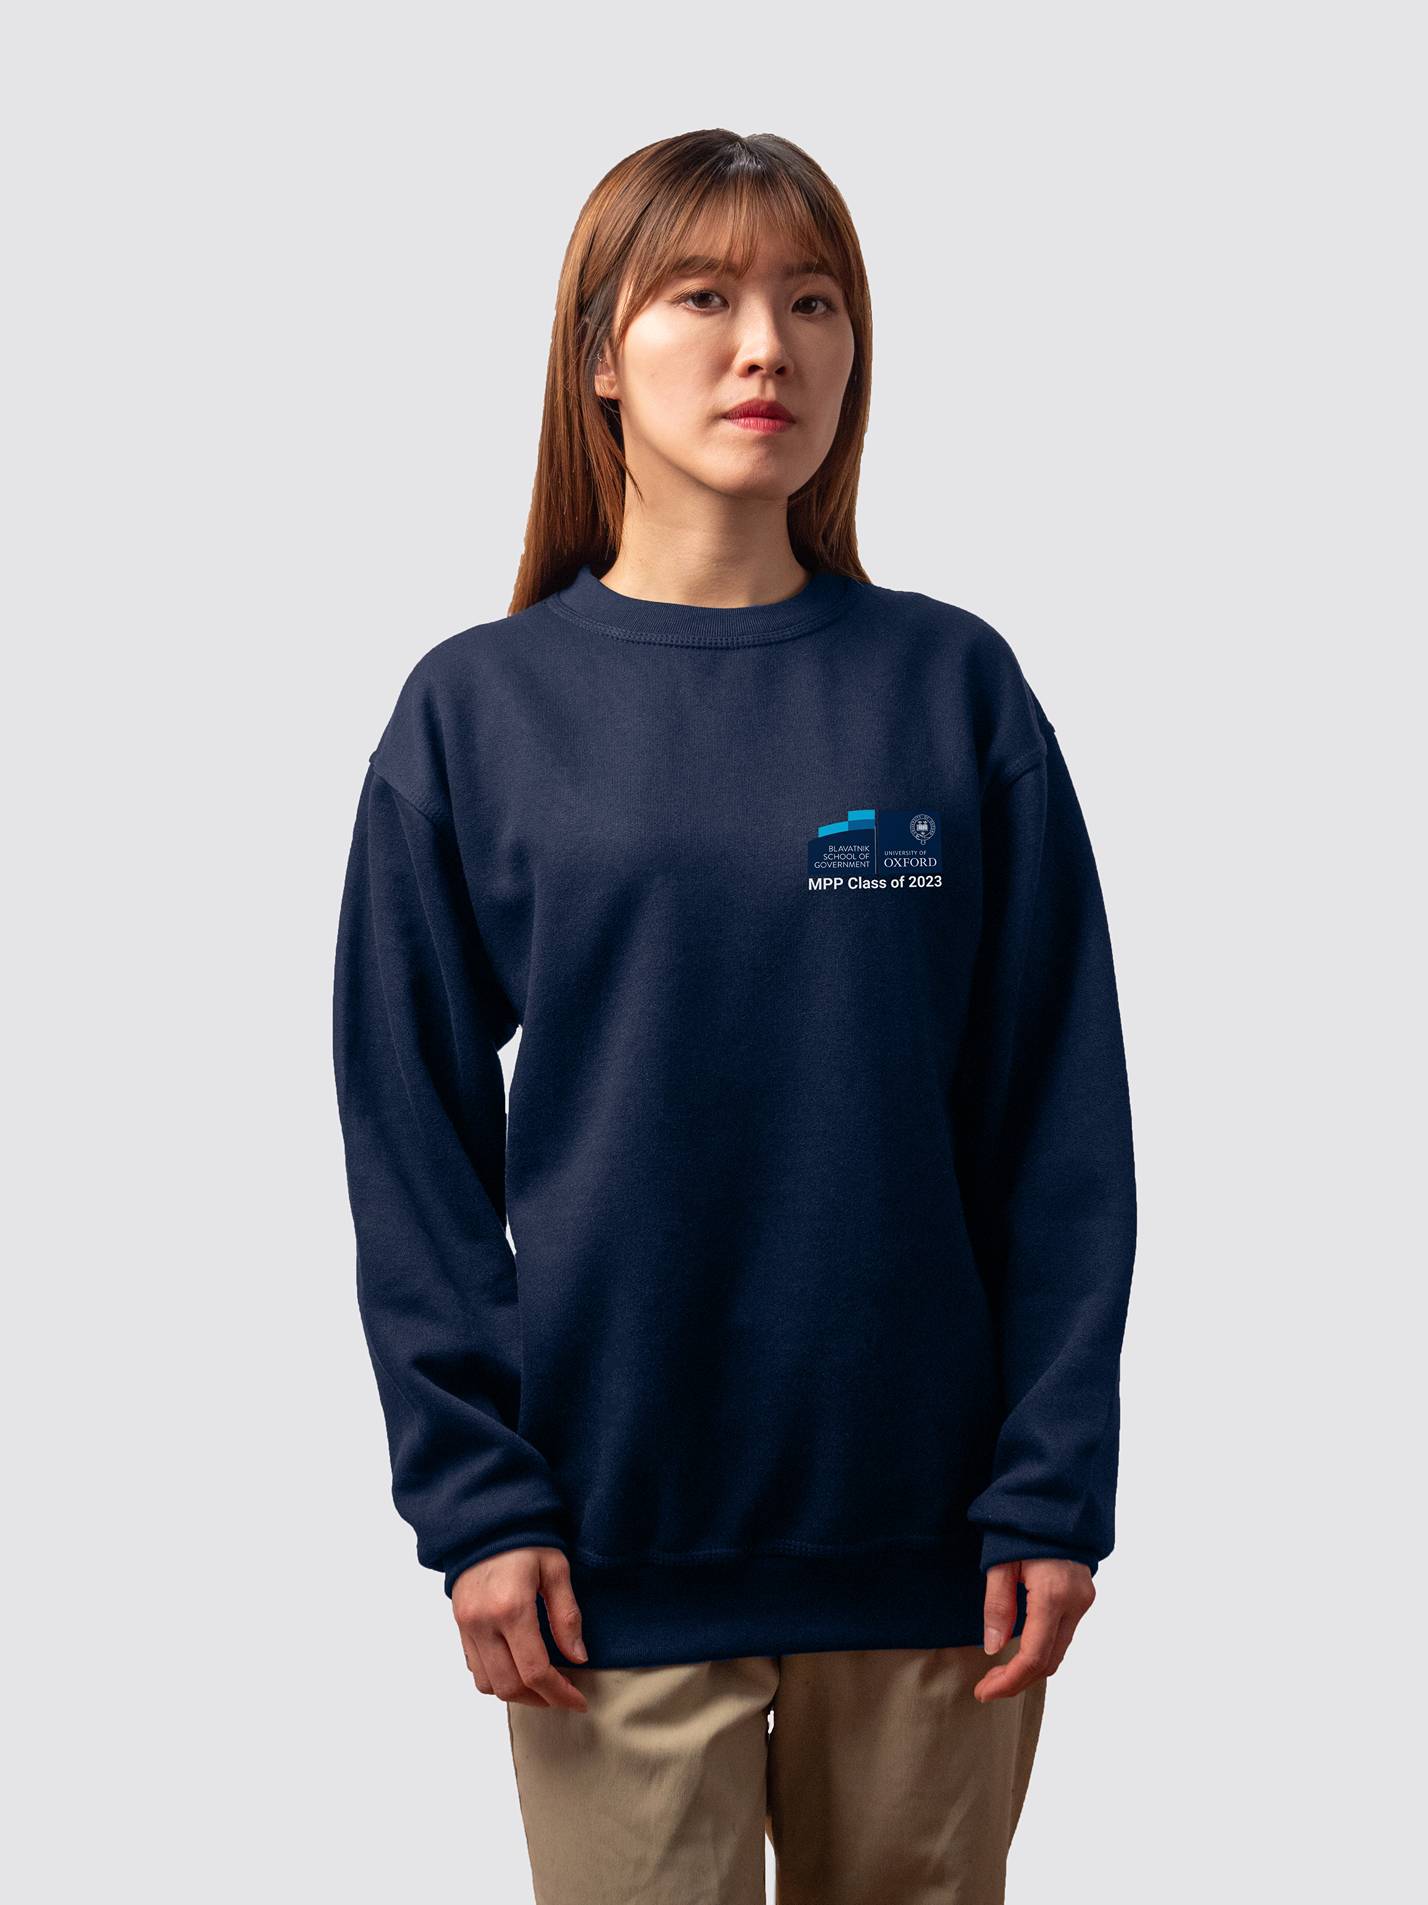 Blavatnik School of Government Unisex Heavyweight Sweatshirt